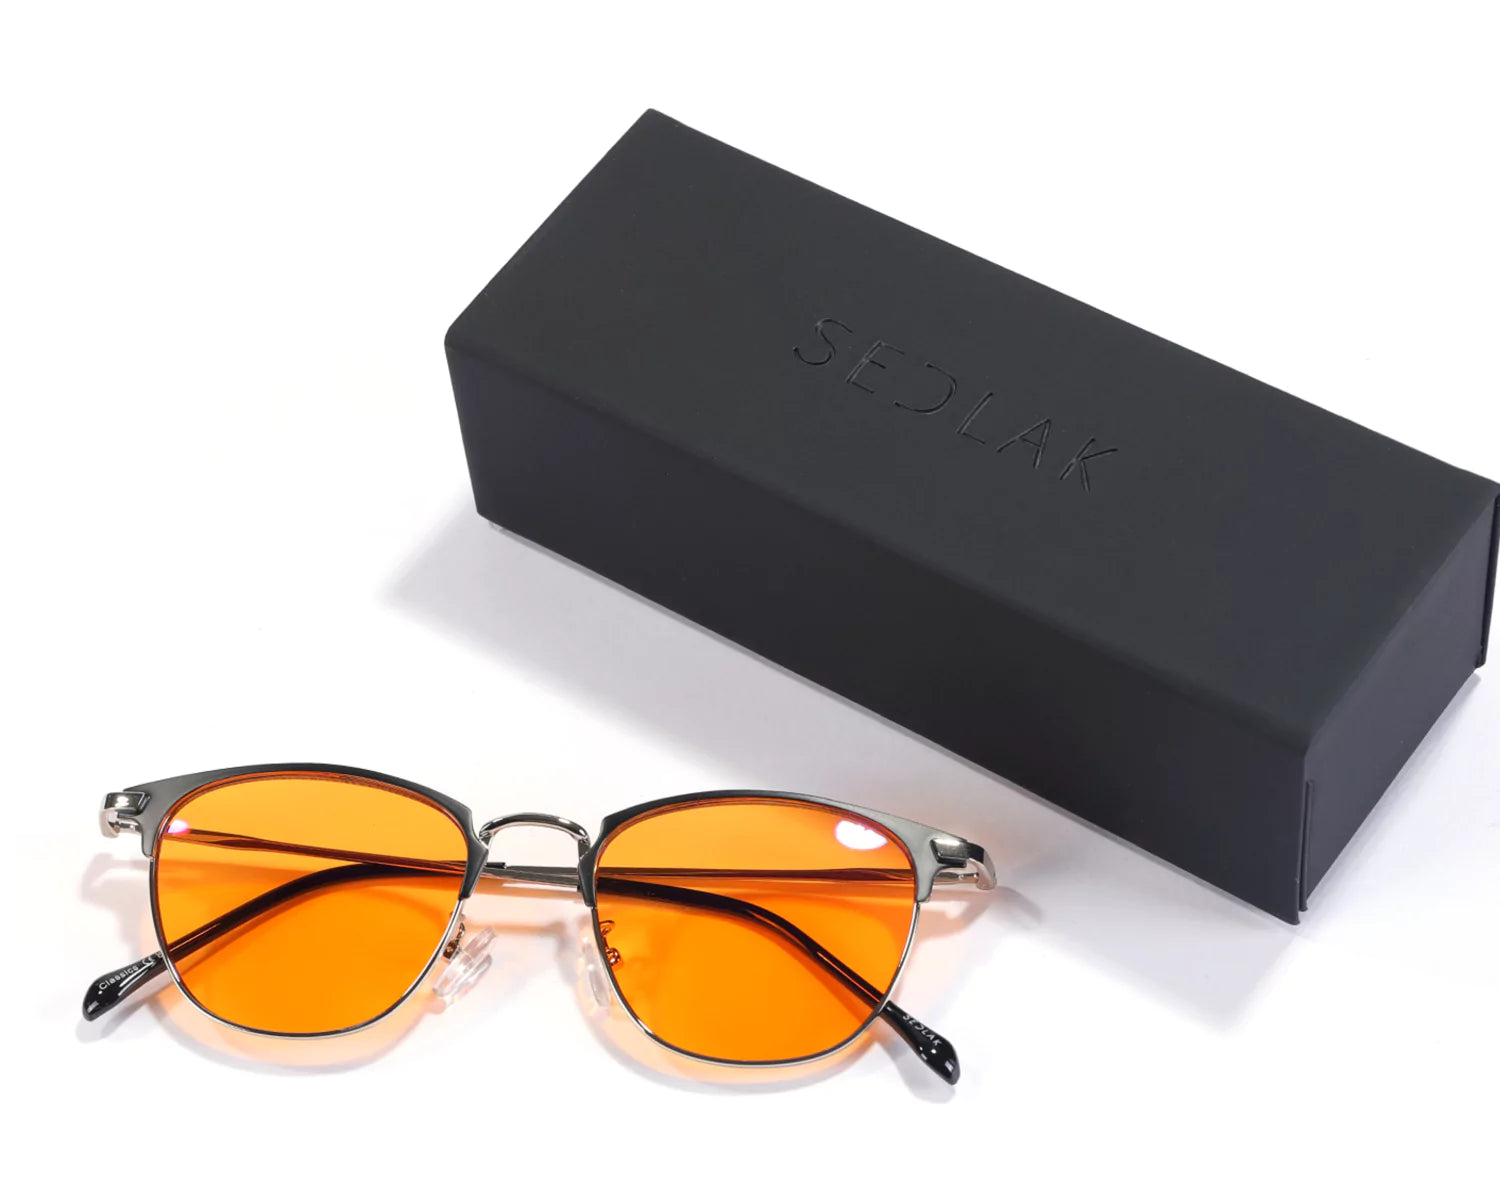 Orange-lensed sunglasses next to a black box with 'SEDLAK' embossed on it.